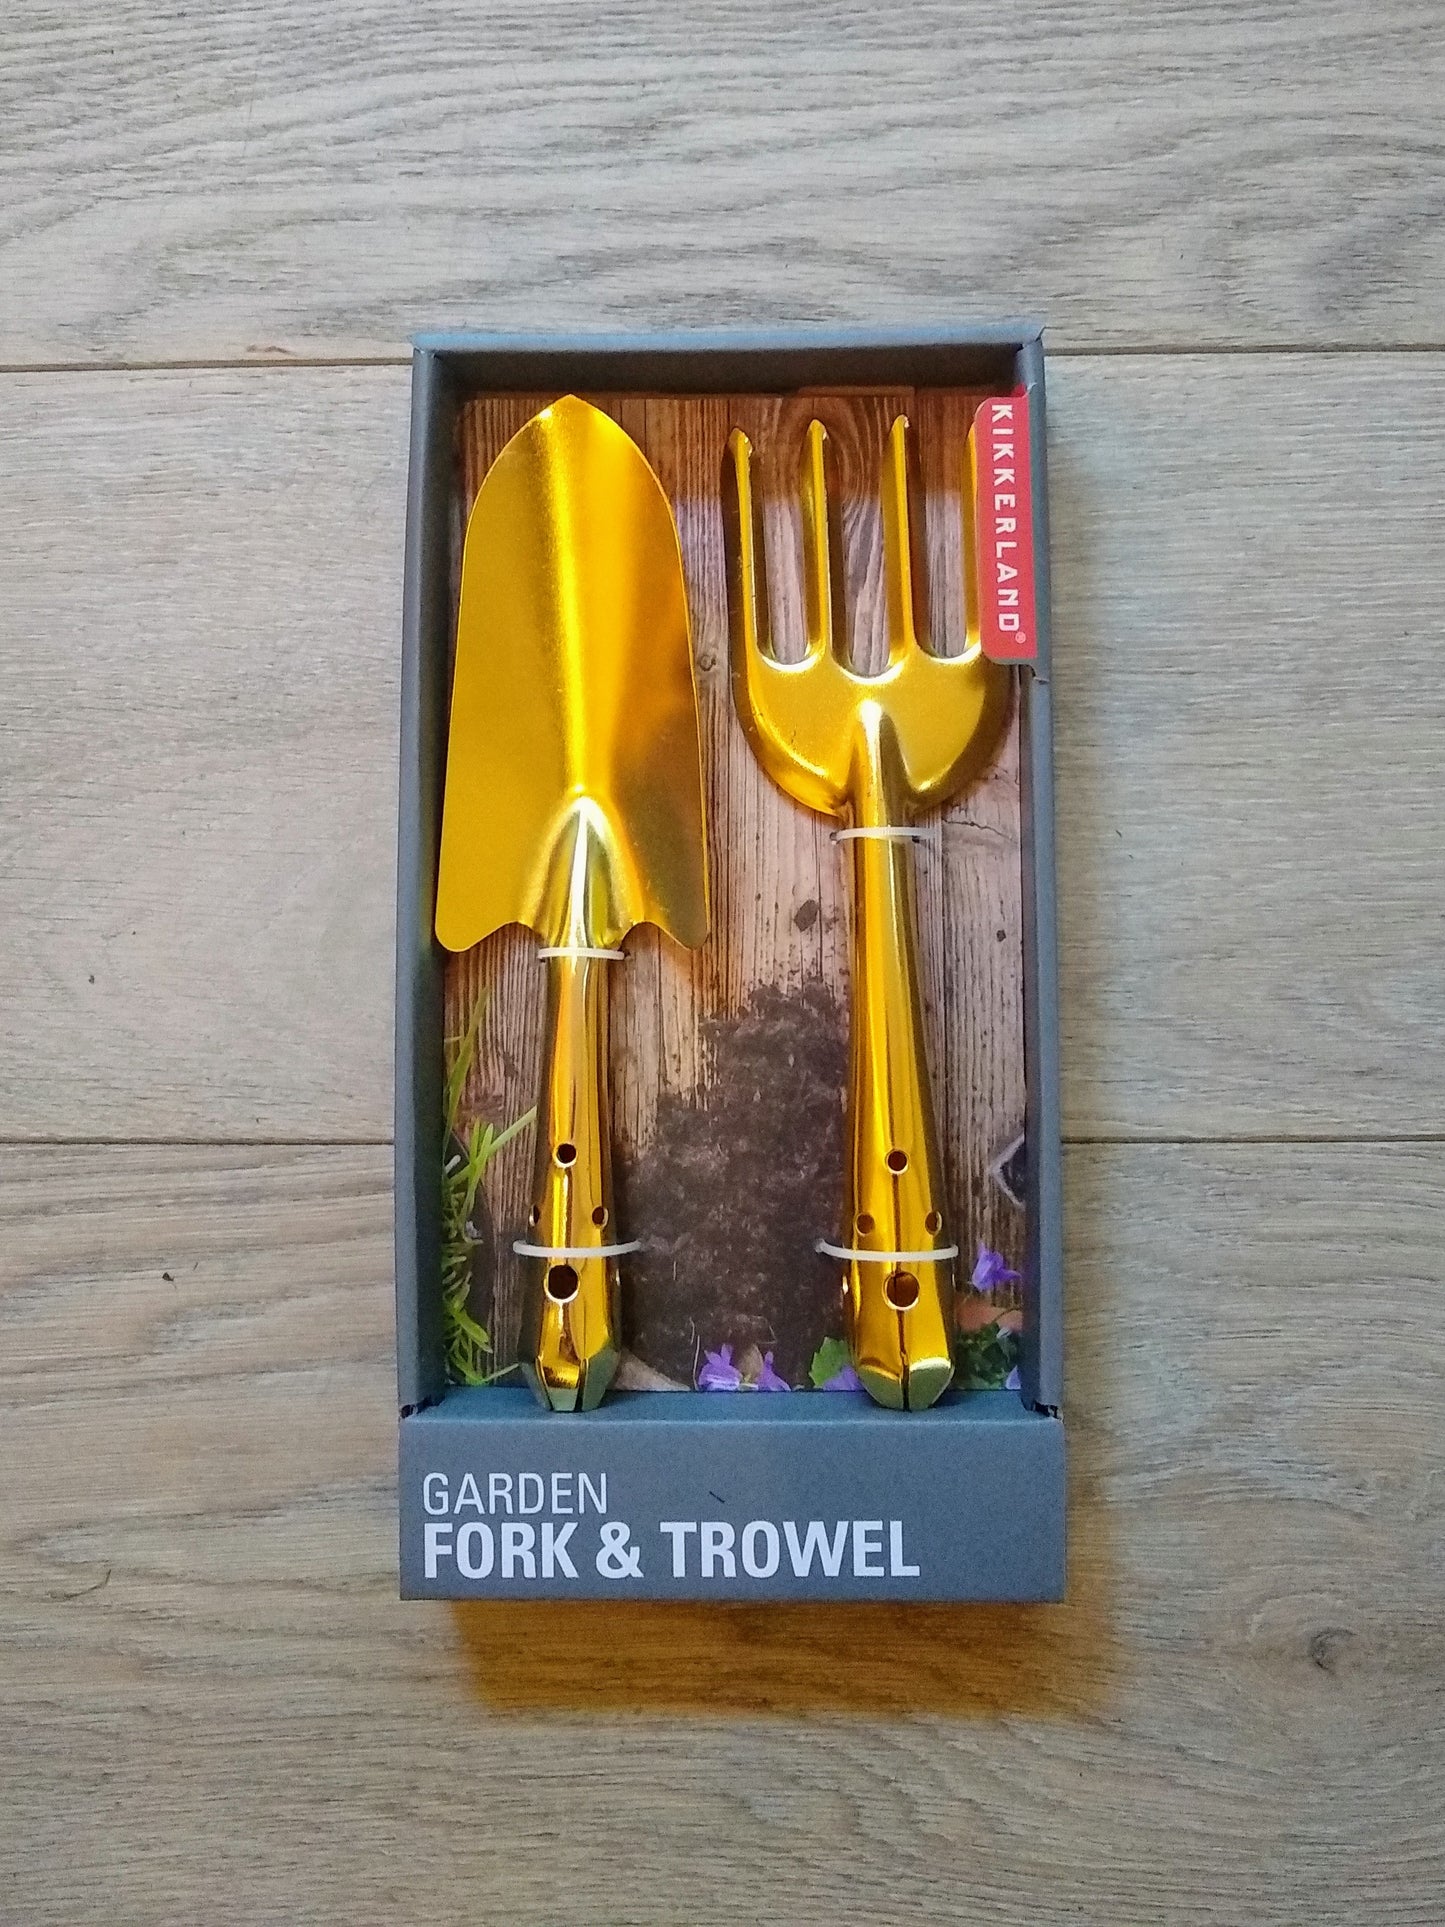 Garden fork & towel